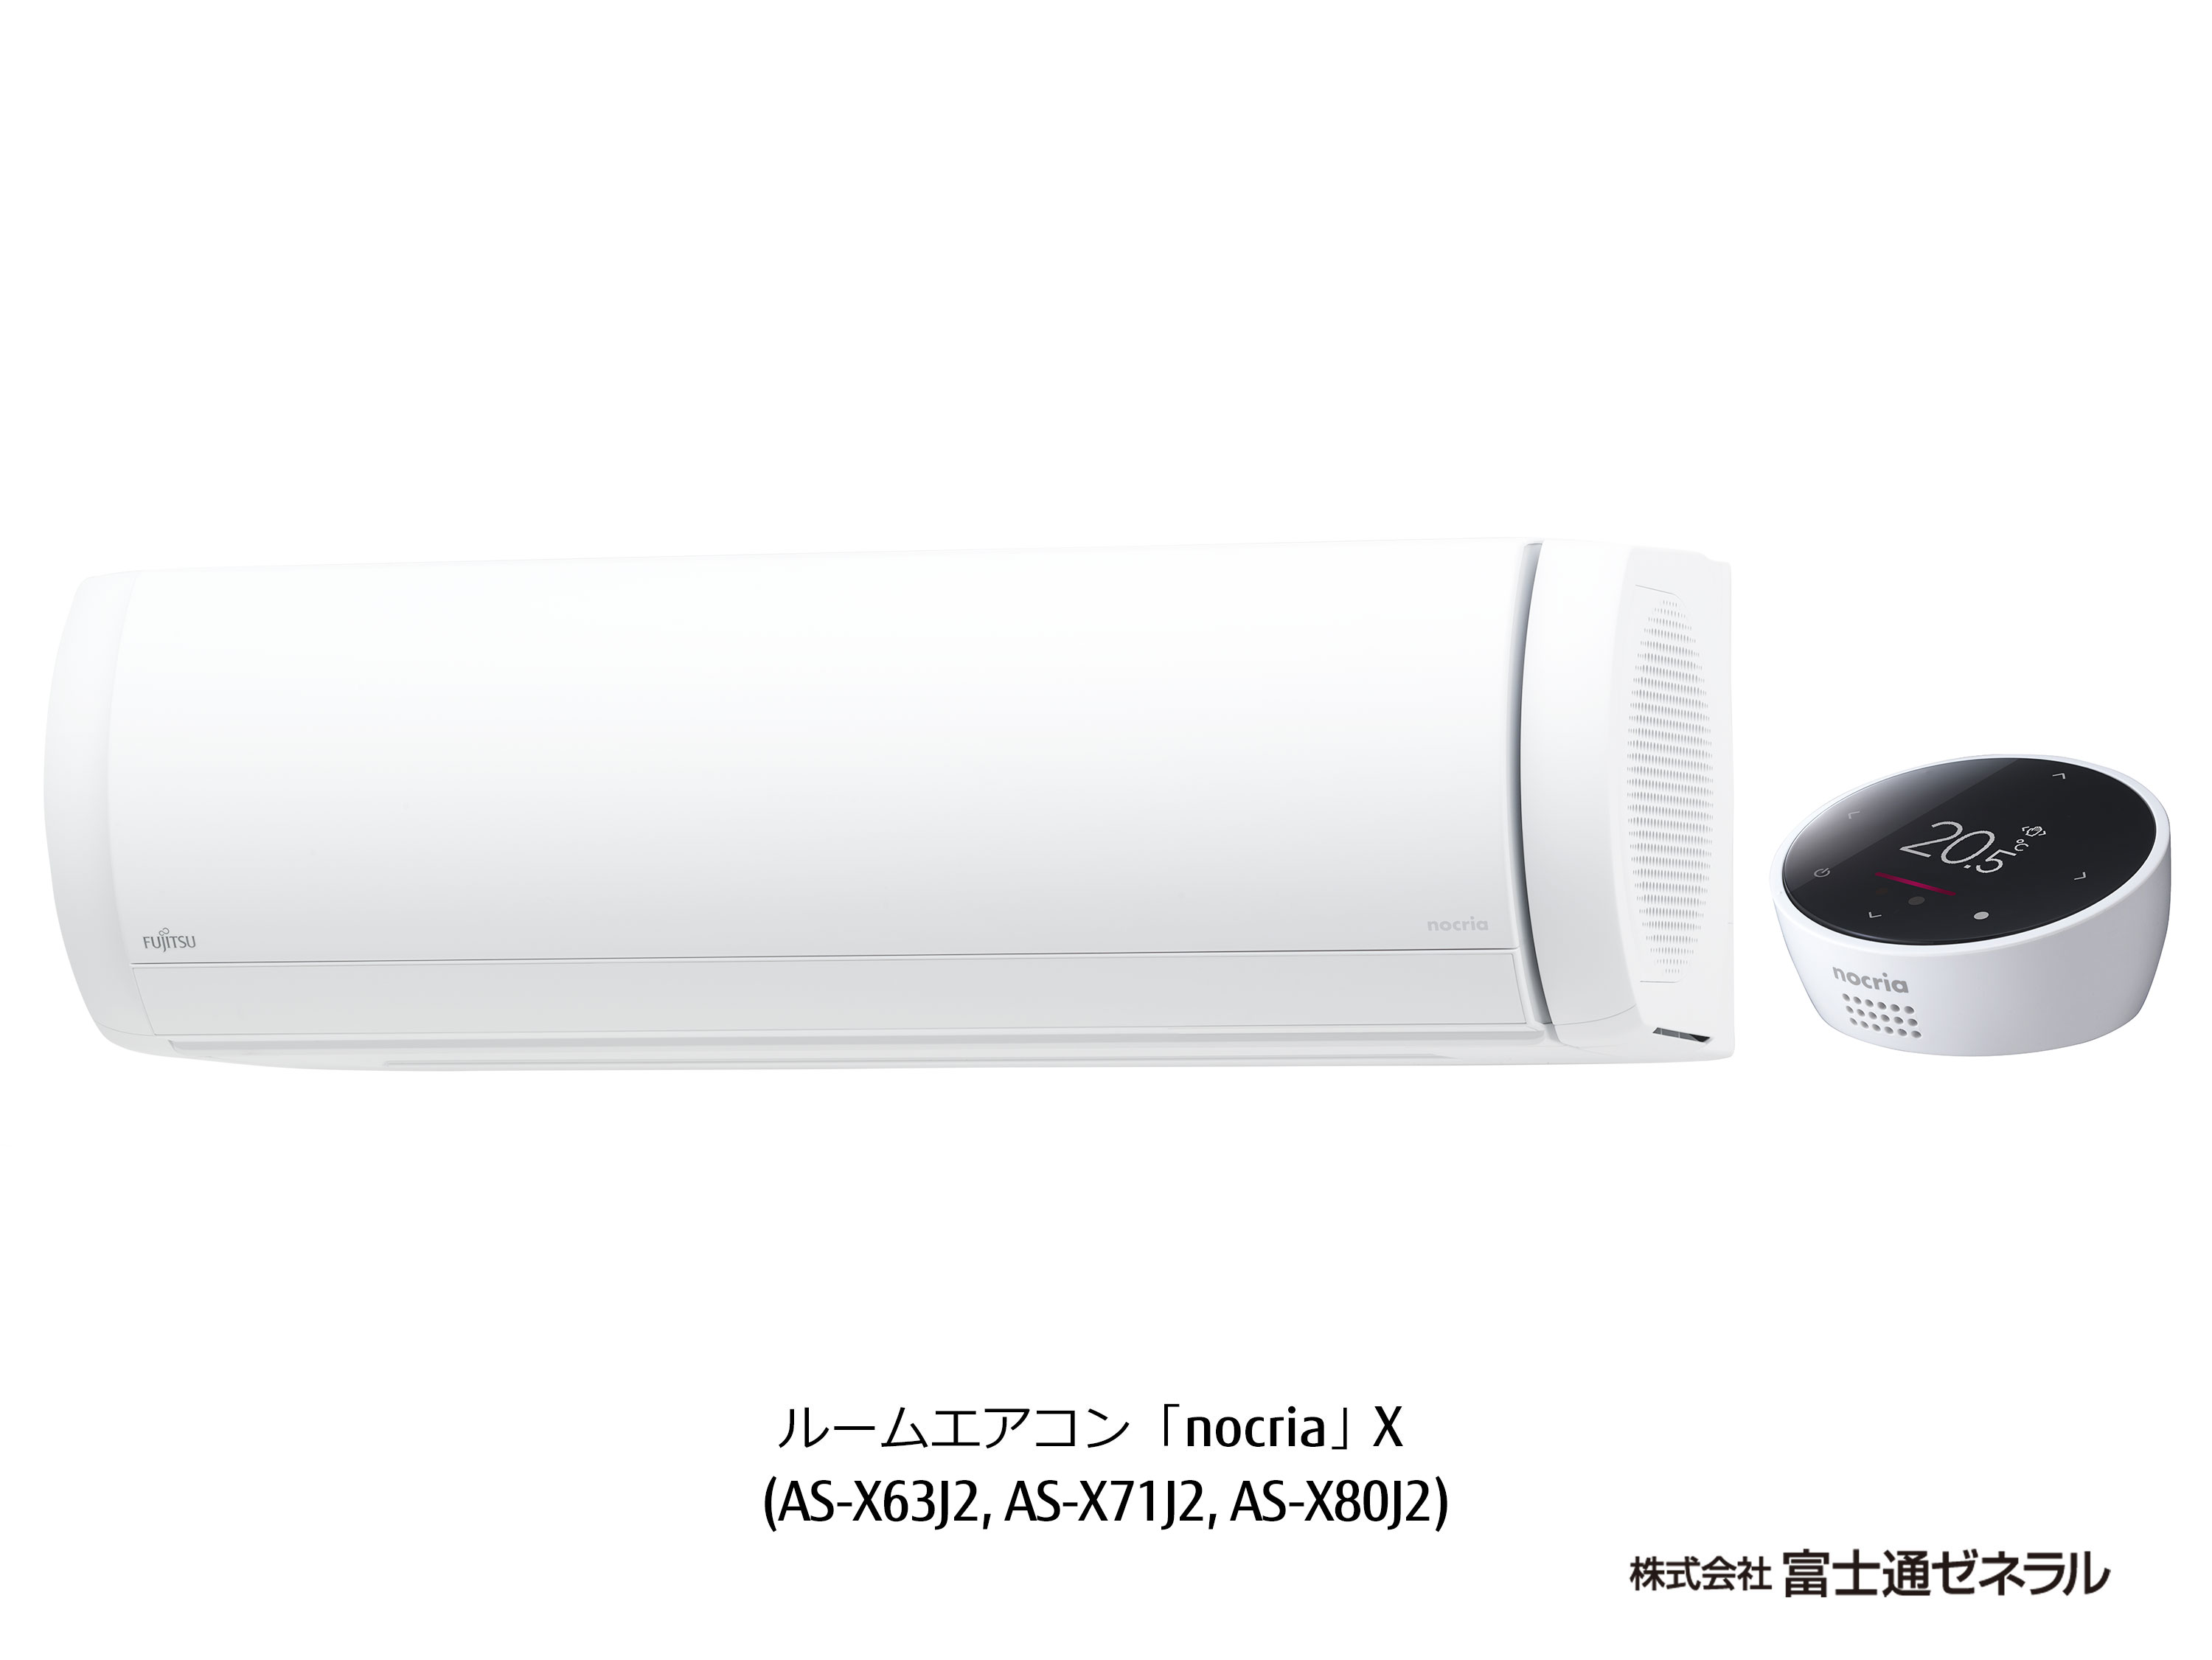 AS-X71J2 スペック 2019年 エアコン nocria®X - 富士通ゼネラル JP